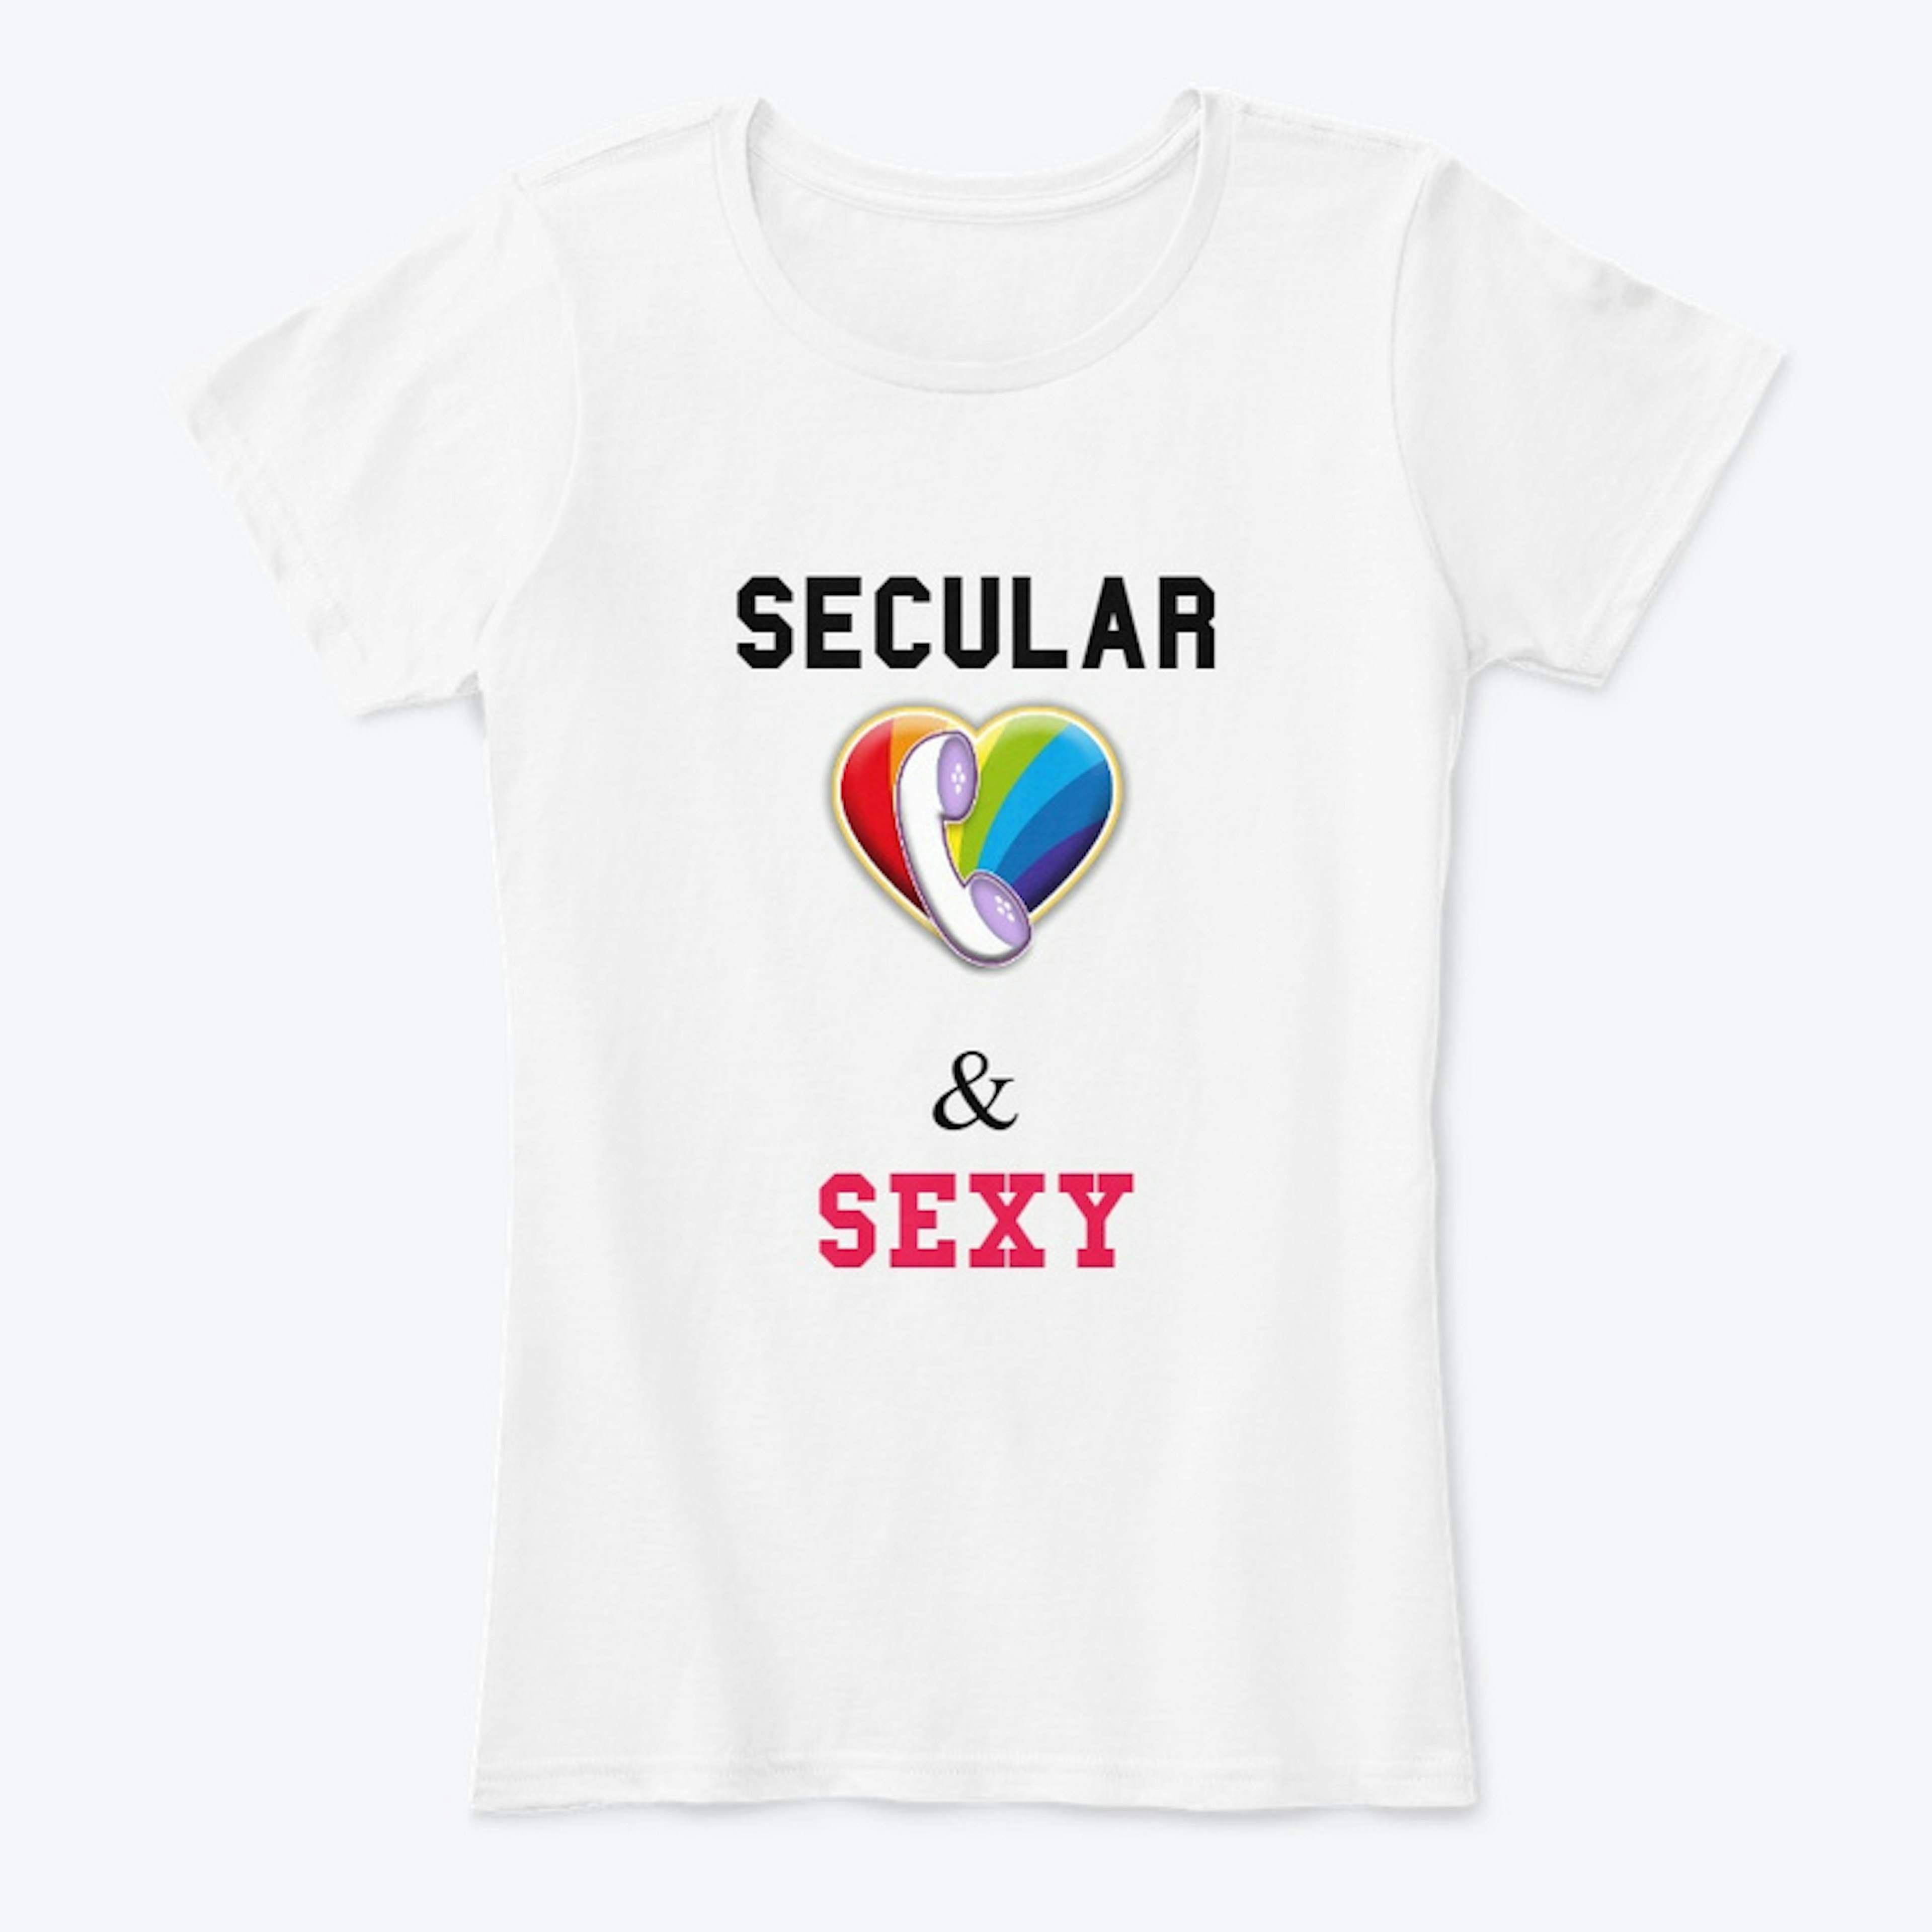 Secular & Sexy - White